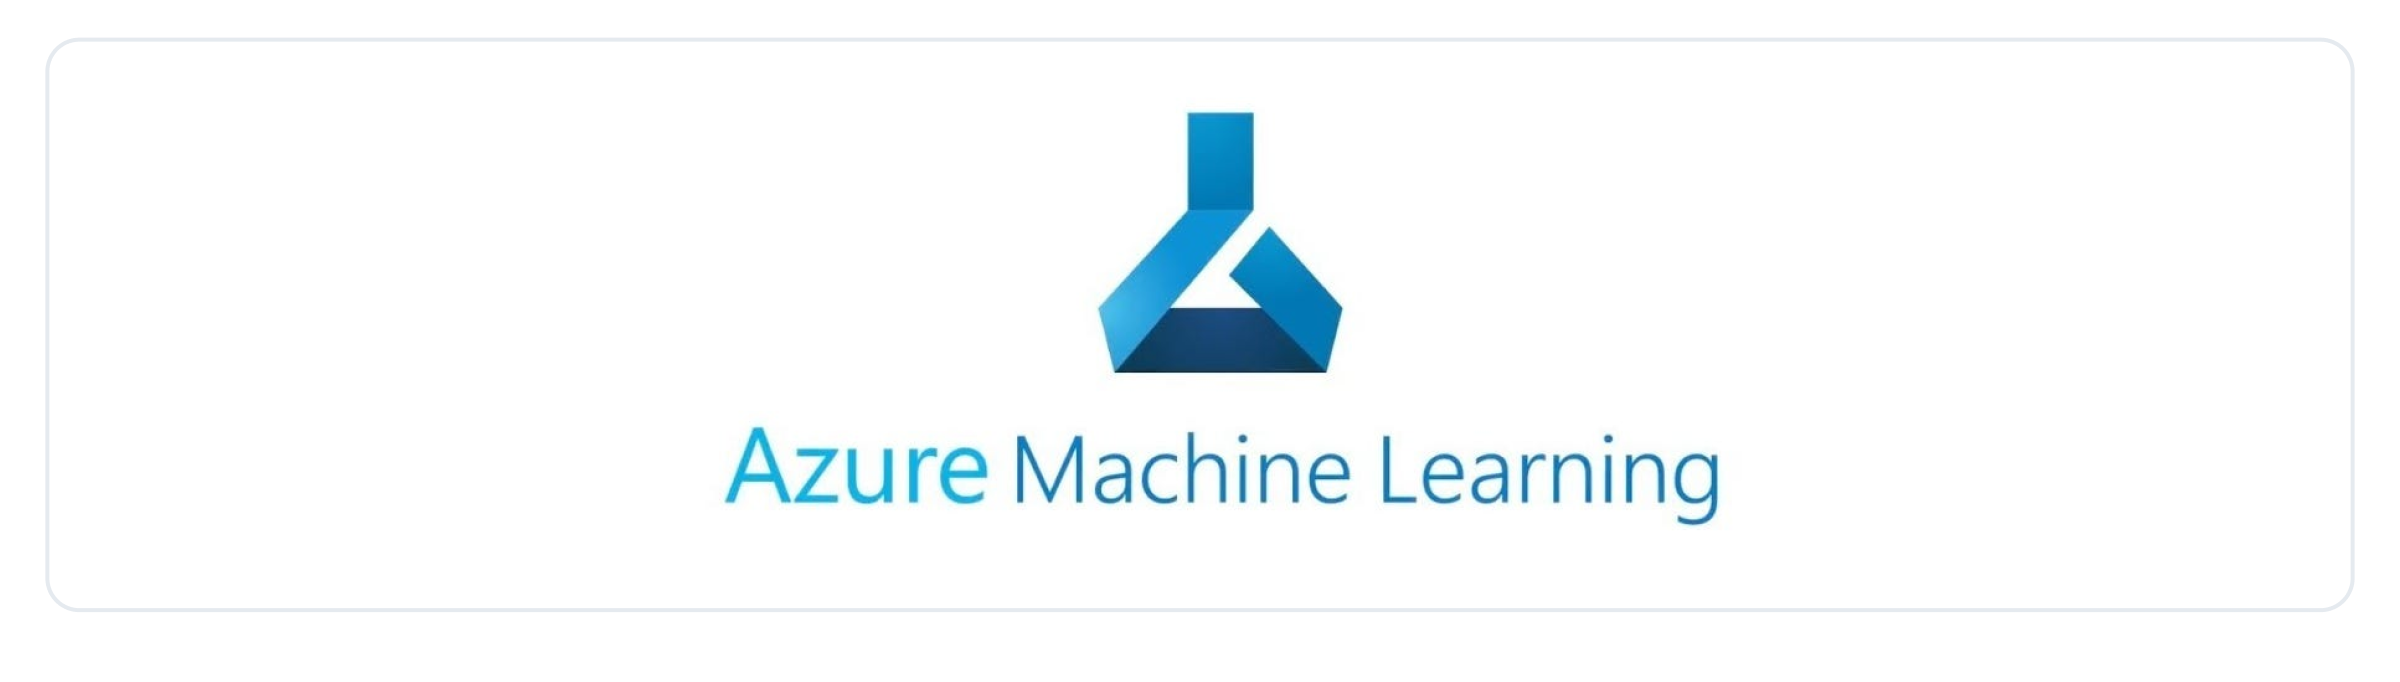 Microsoft Azure AutoML logo.